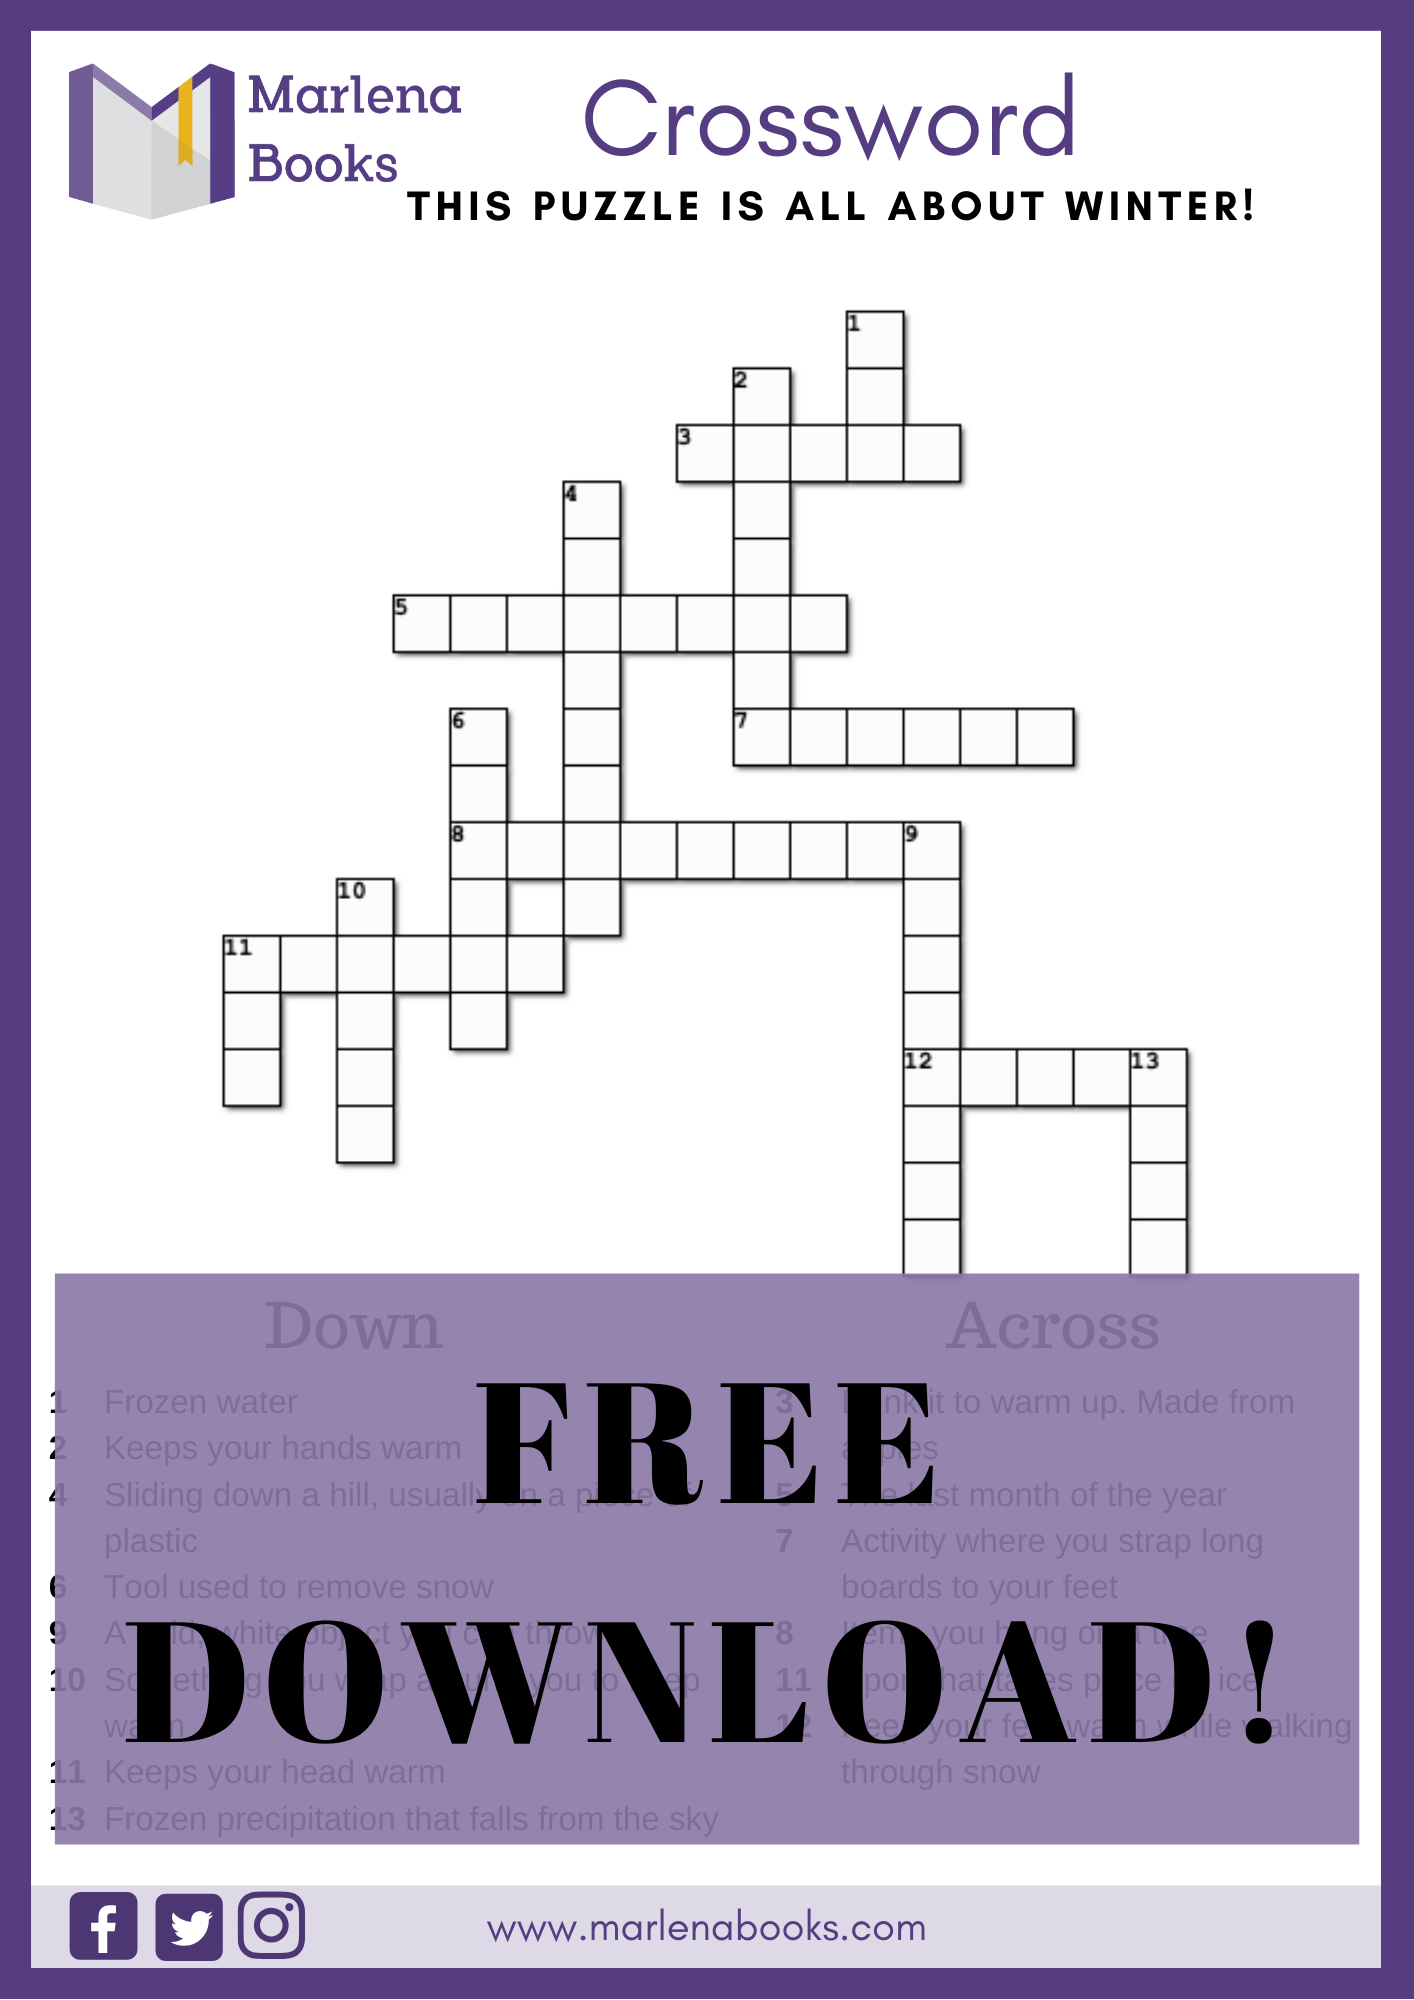 winter-crossword-free-download-marlena-books